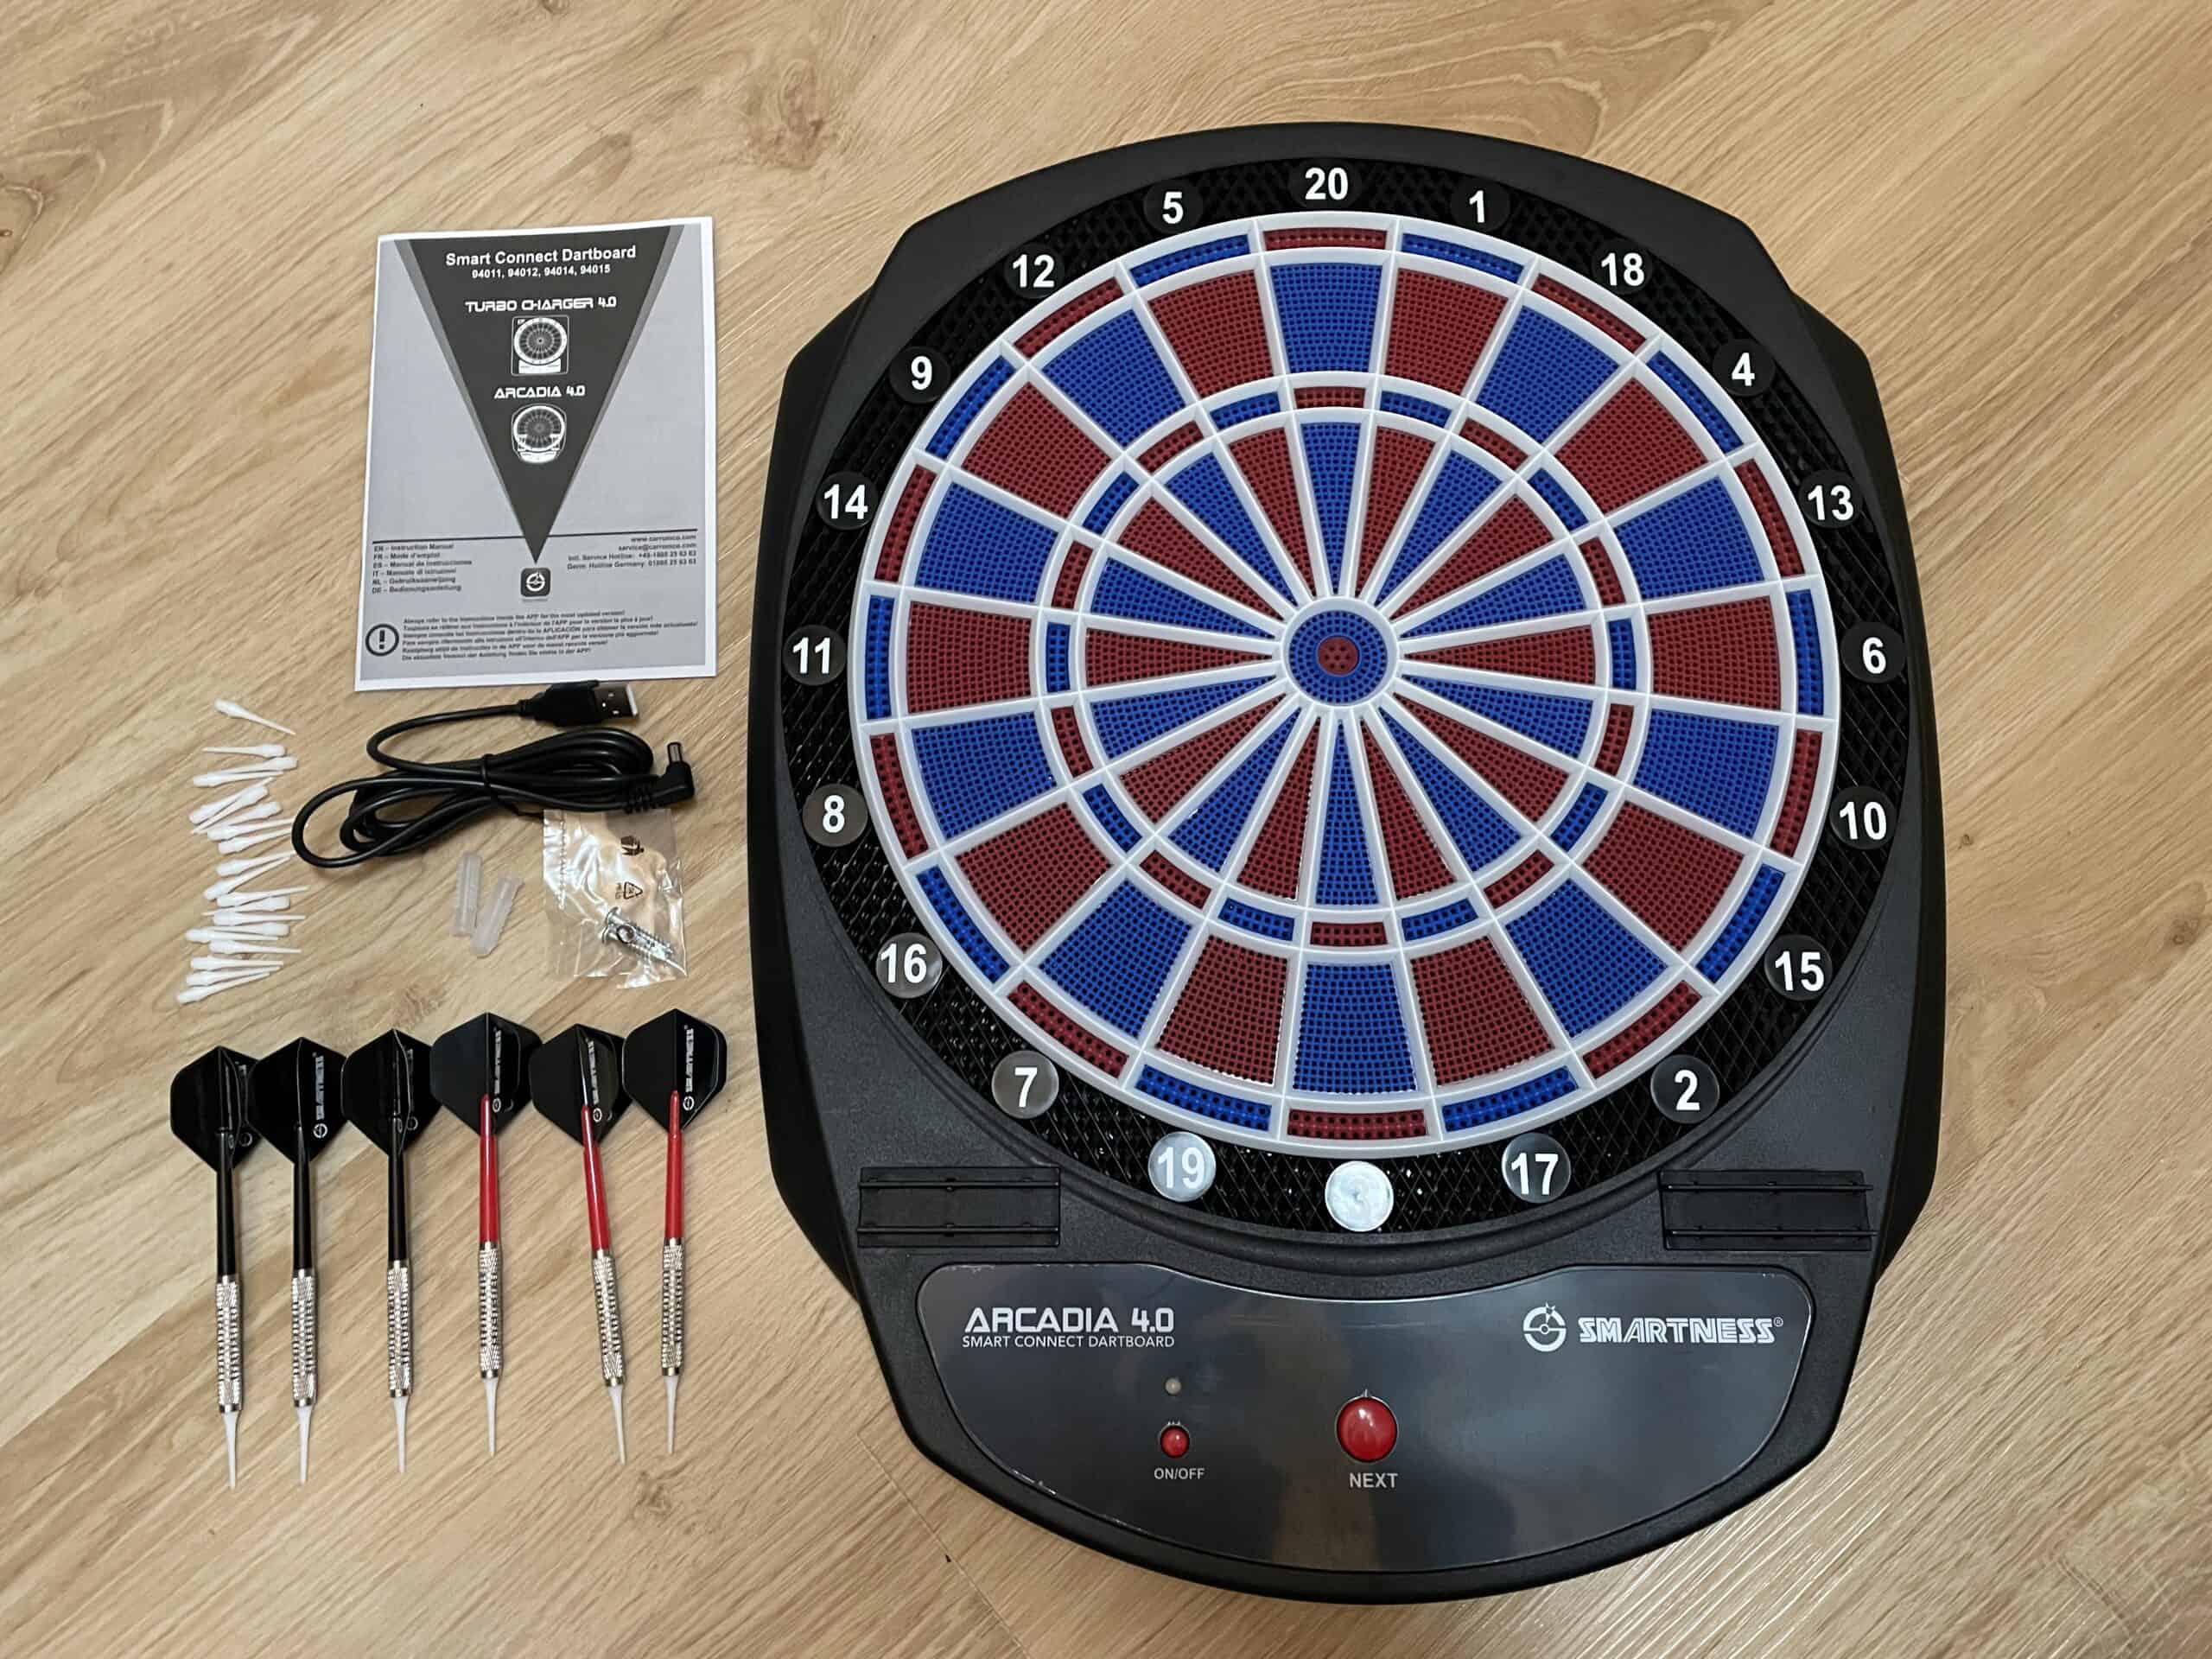 E-Dartboard Connect Dein Smart Carromco im - Arcadia Test Smarte Magazin 4.0 Smart iQhaus.de | Home Dartscheibe -